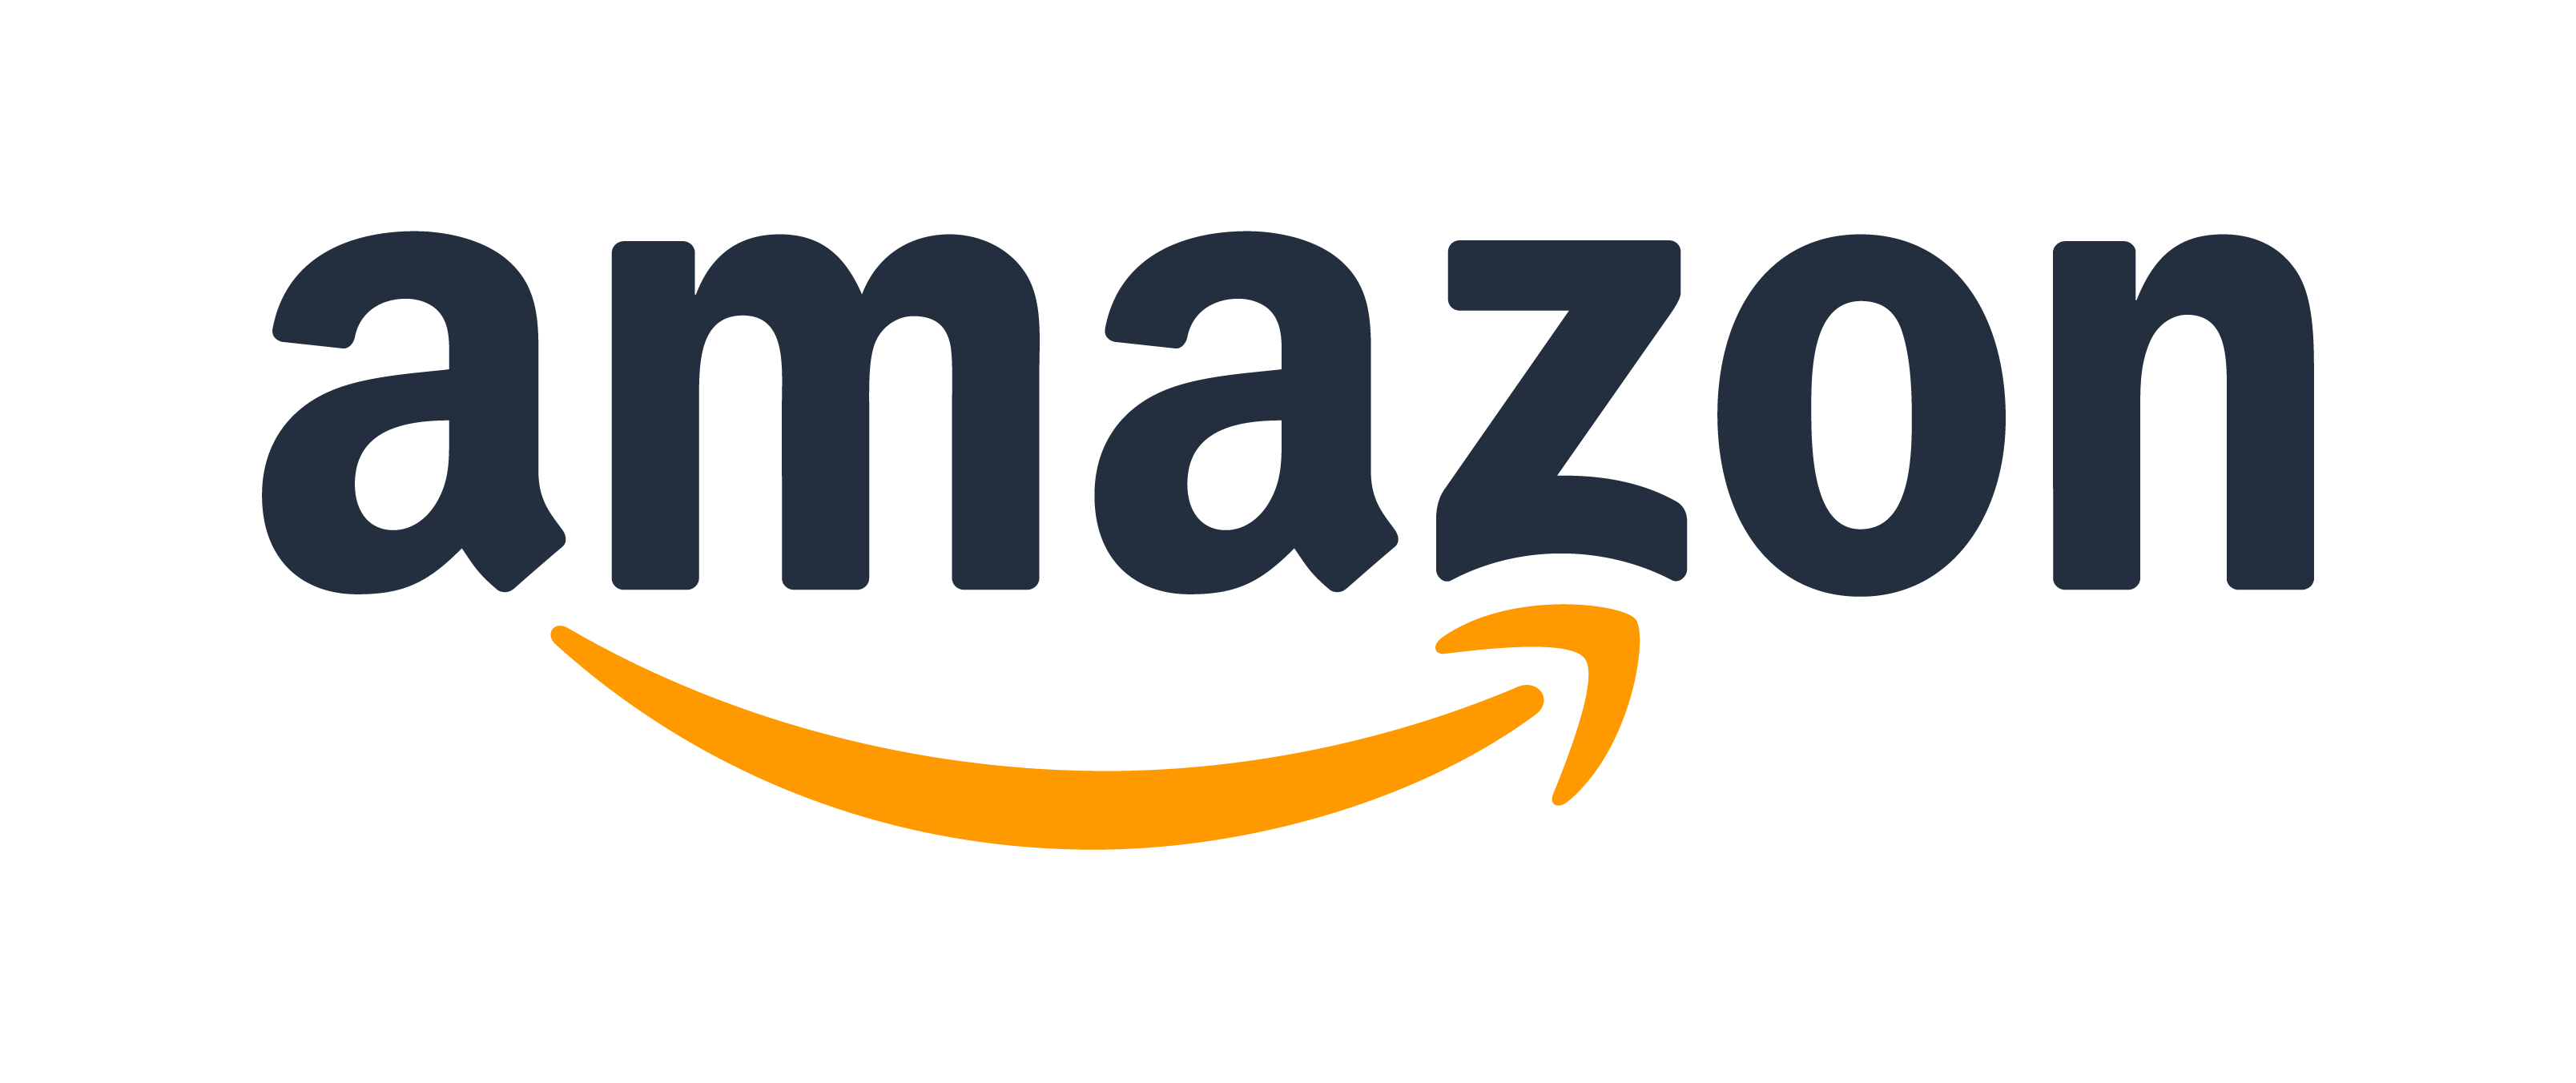 Amazon Corporate Logo - image and videos. Amazon.com, Inc